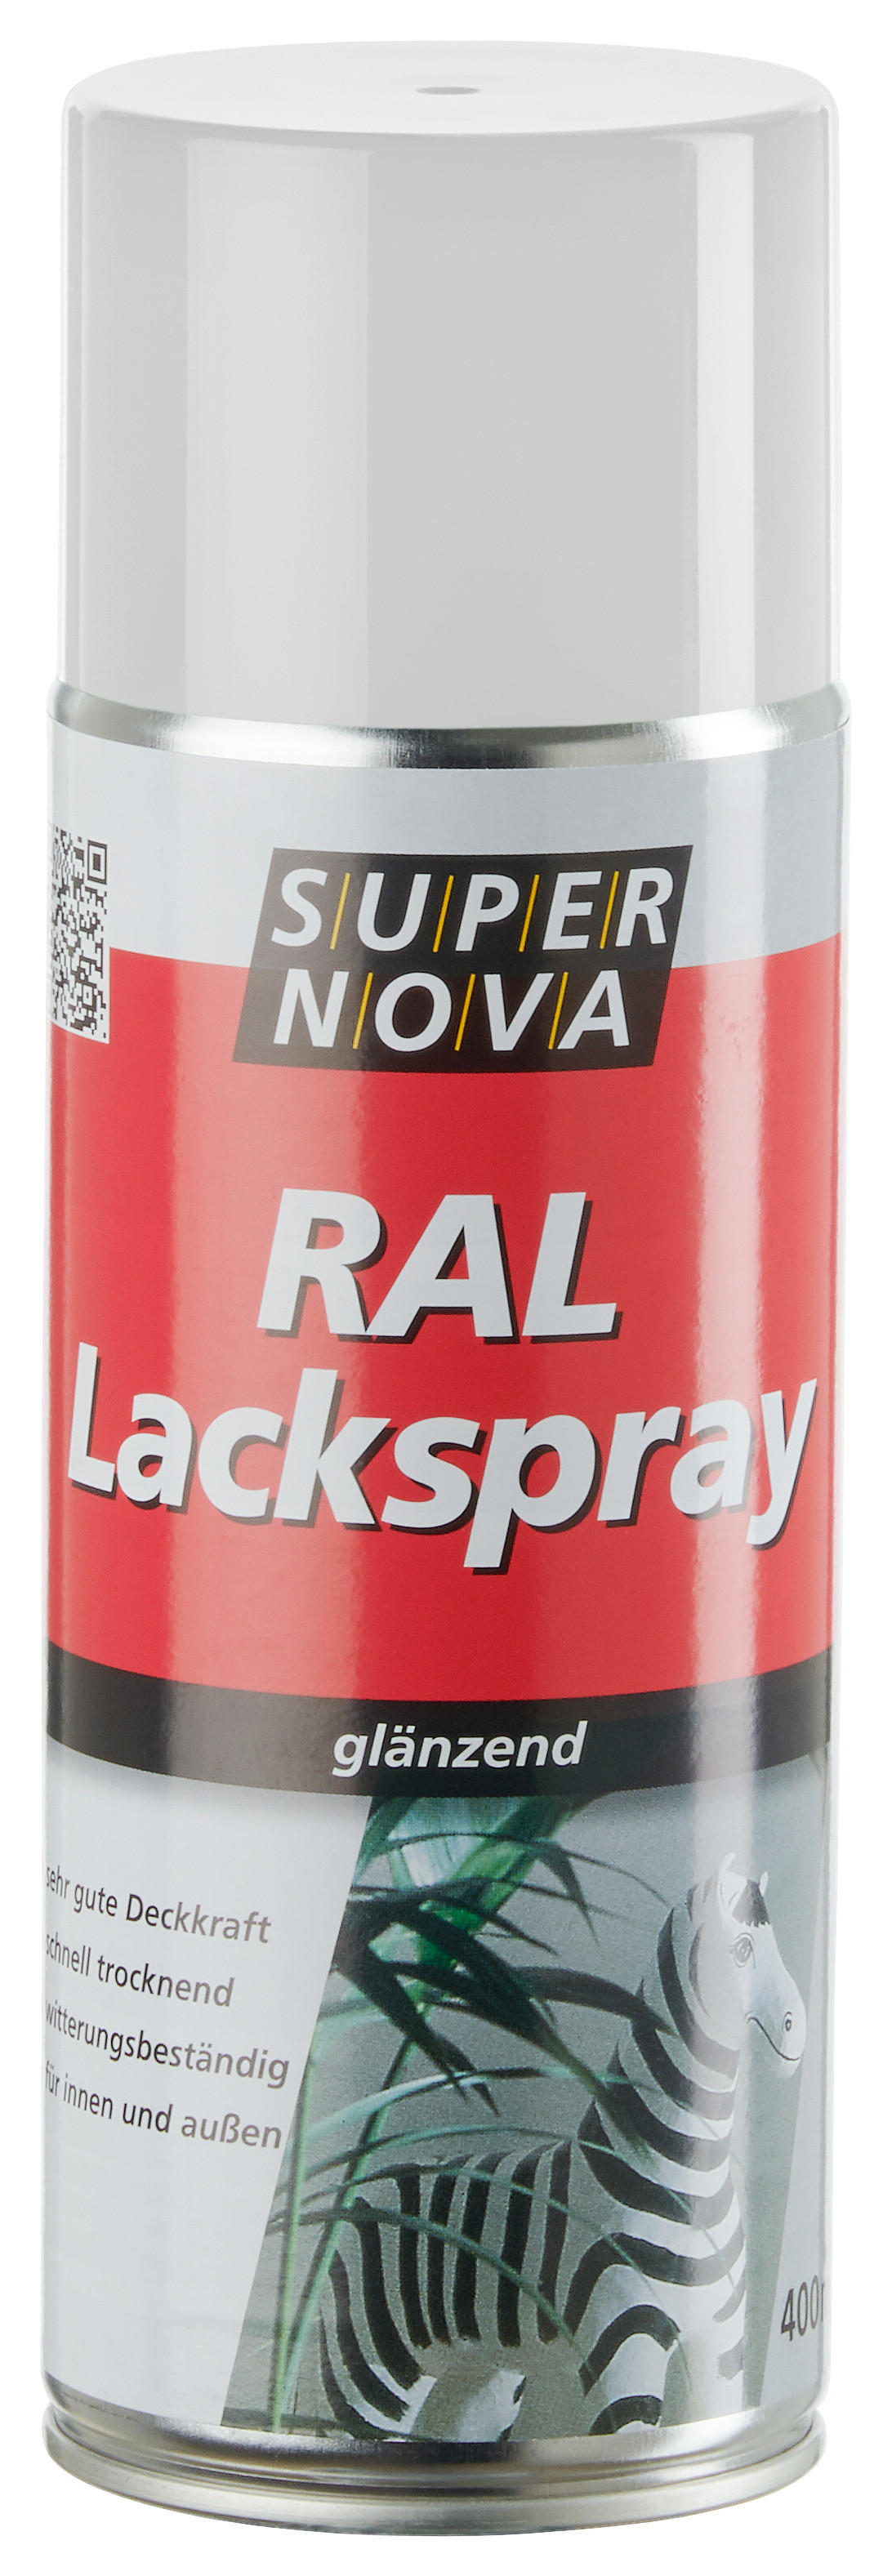 Super-Nova Lackspray weiß glänzend ca. 0,4 l Lackspray 400ml - weiß (400ml)